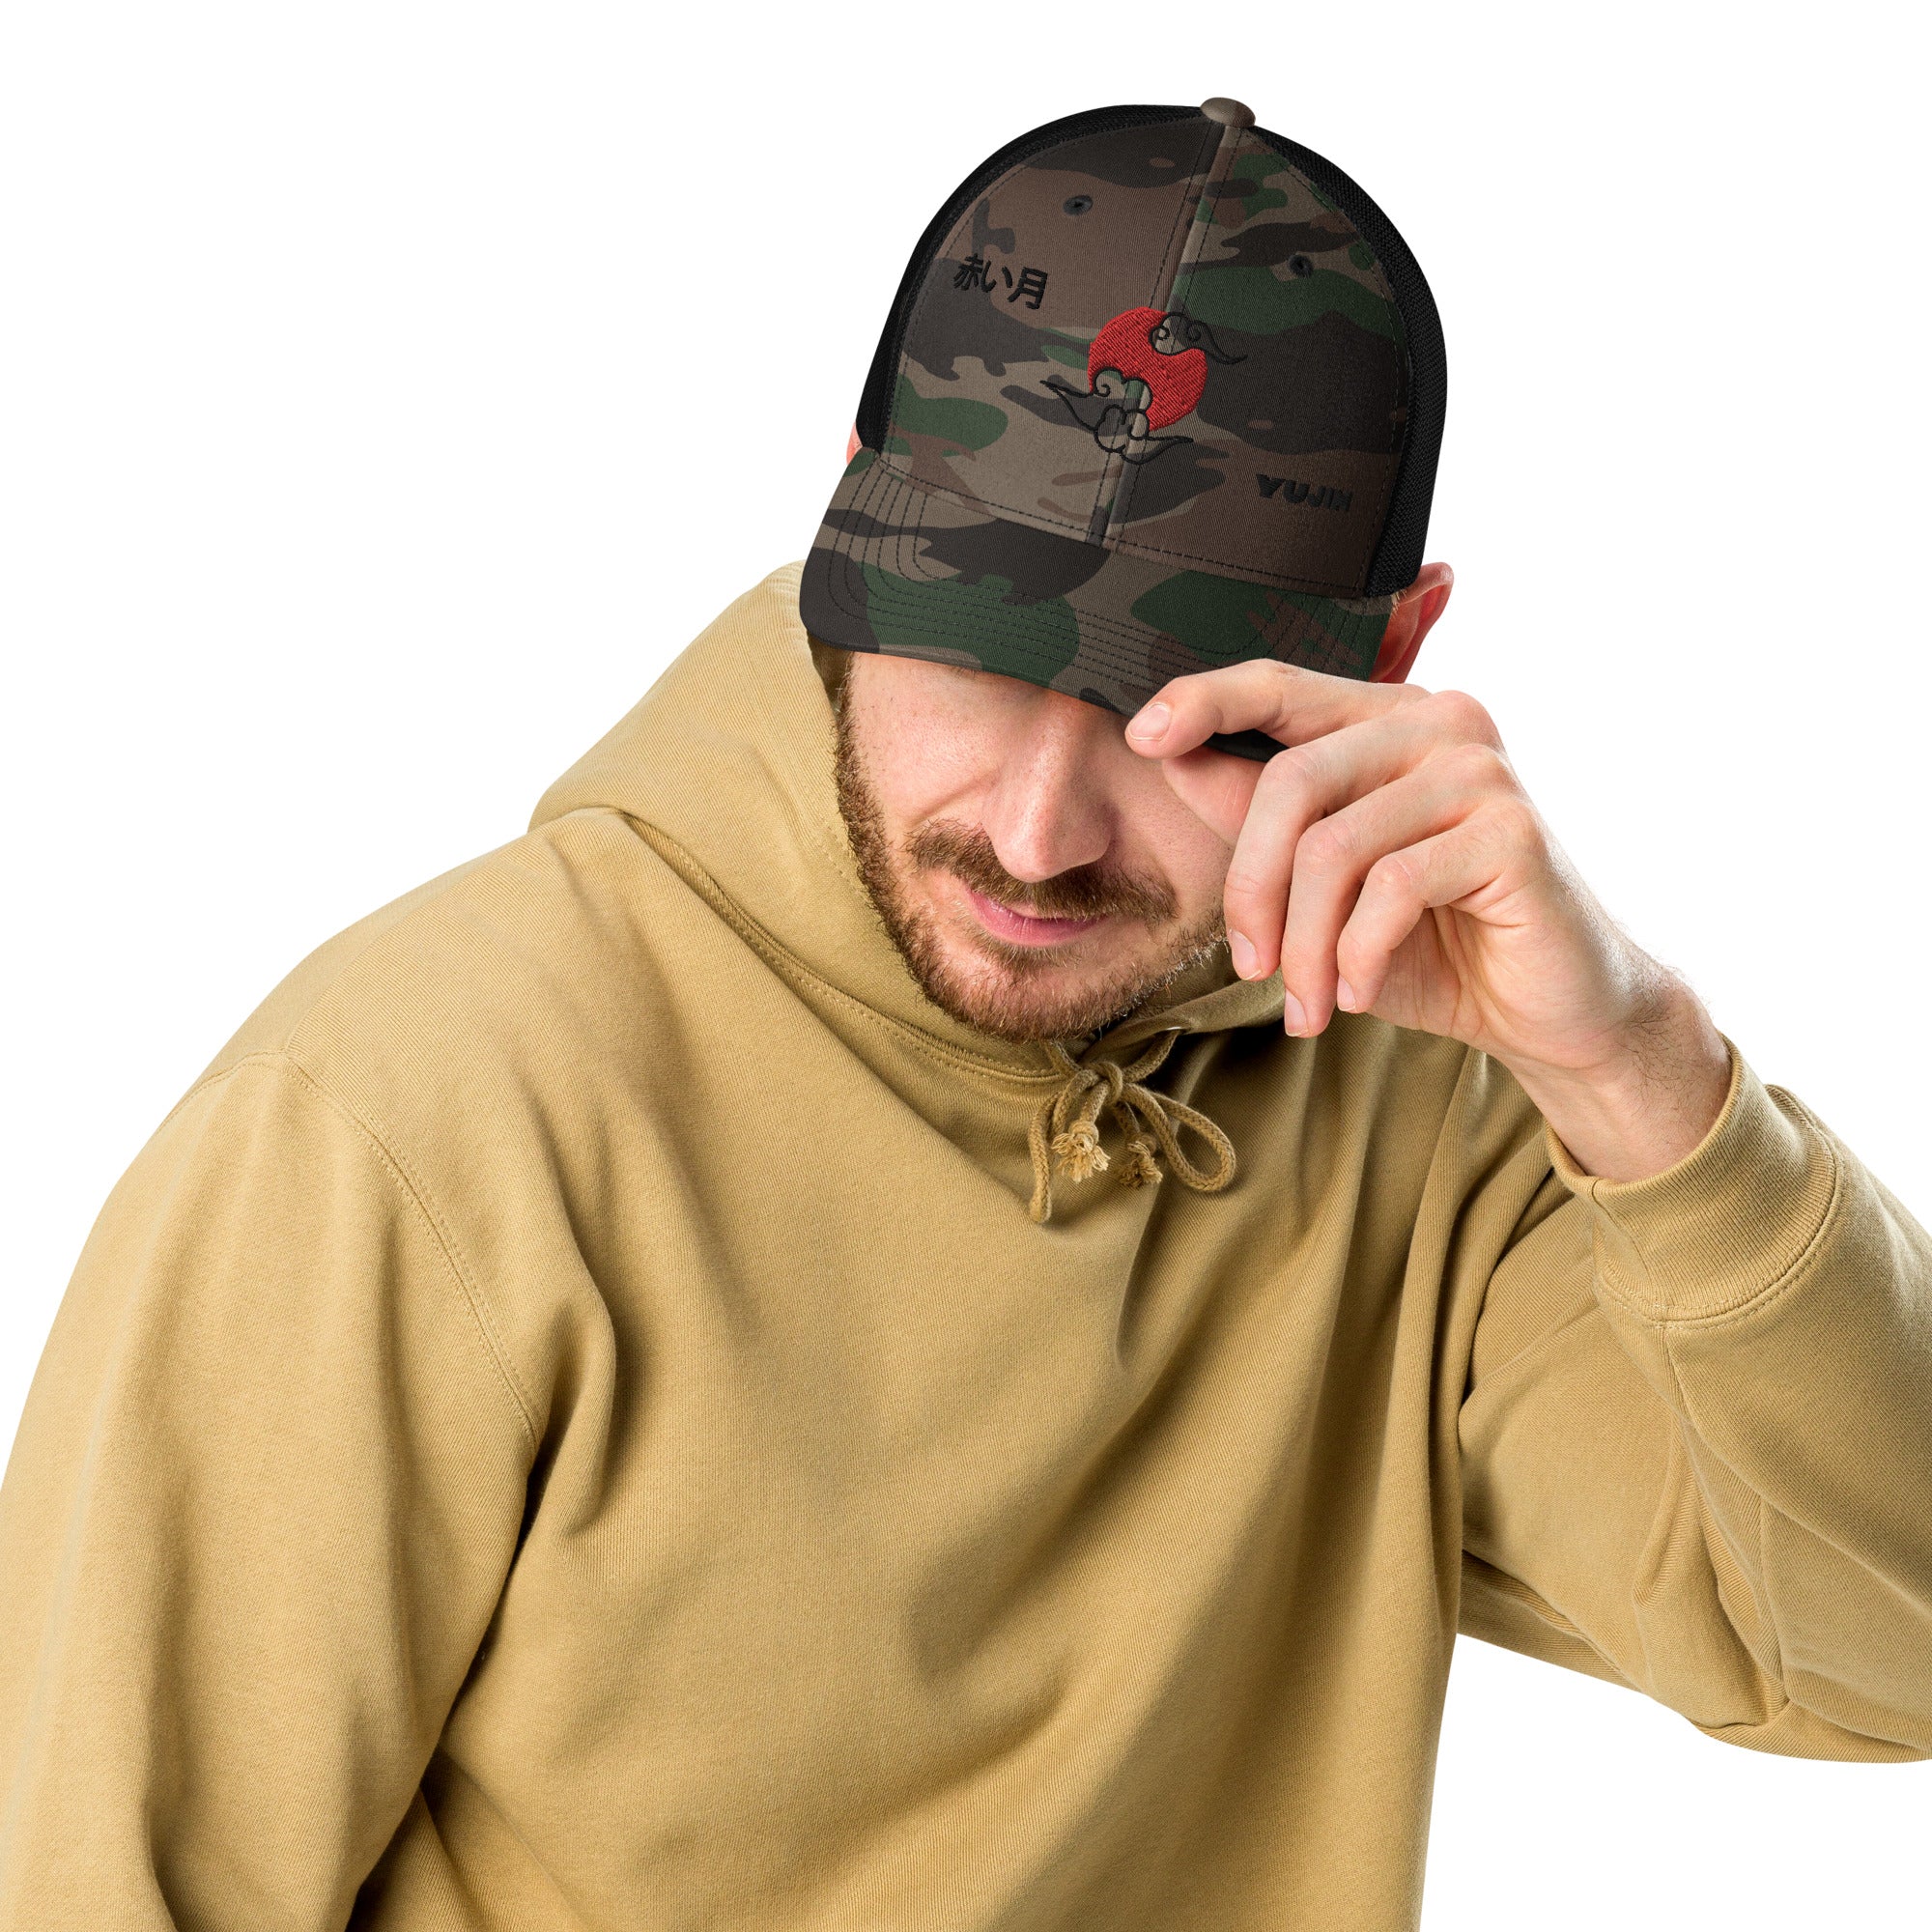 Red Moon Camouflage Trucker Hat  | Yūjin Japanese Anime Streetwear Clothing